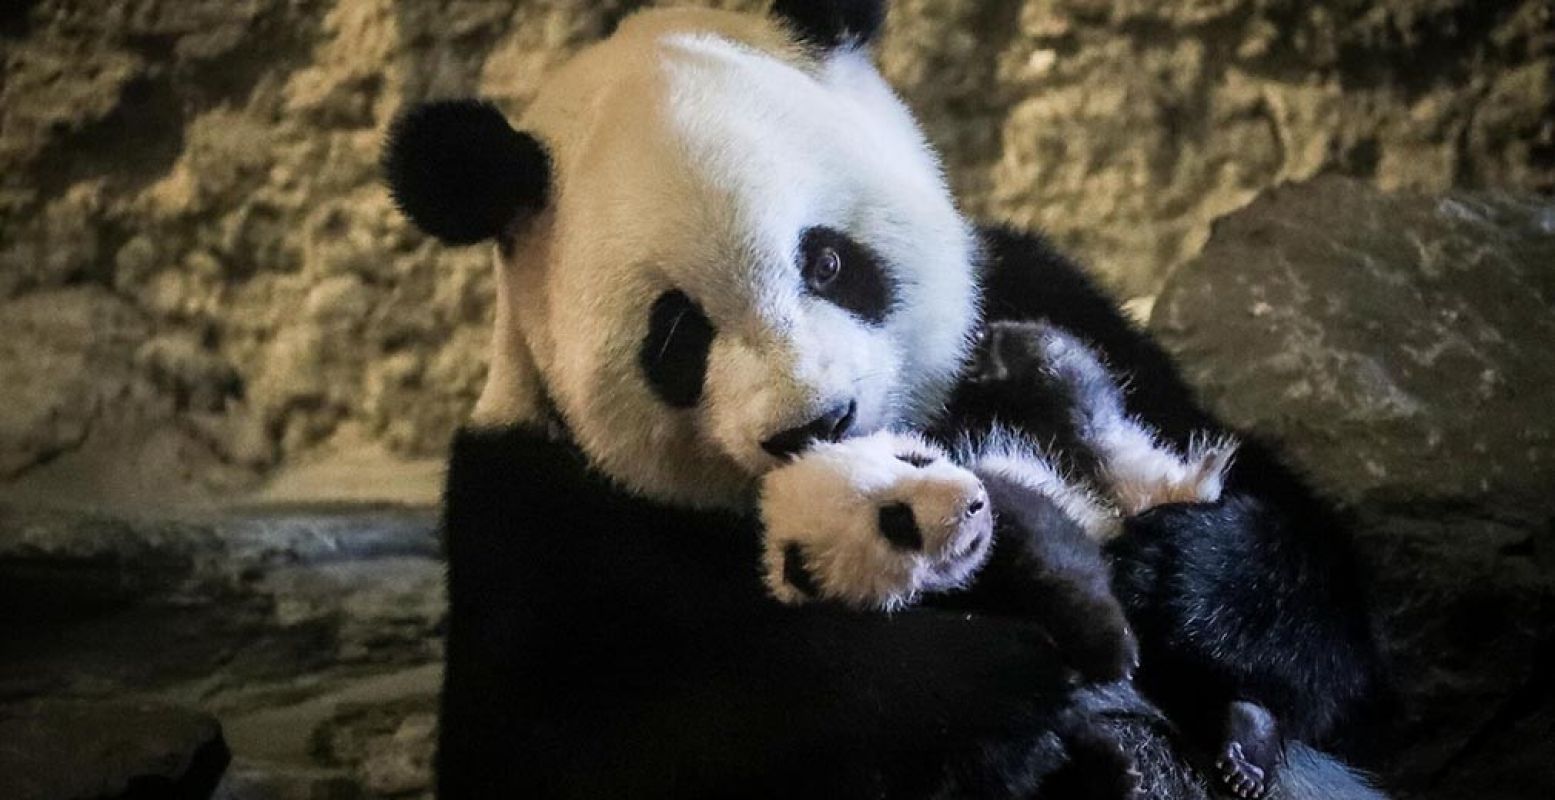 Pandamoeder Hao Hao knuffelt met babypanda Tian Bao in België. Foto: Pairi Daiza, © Benoit Bouchez.